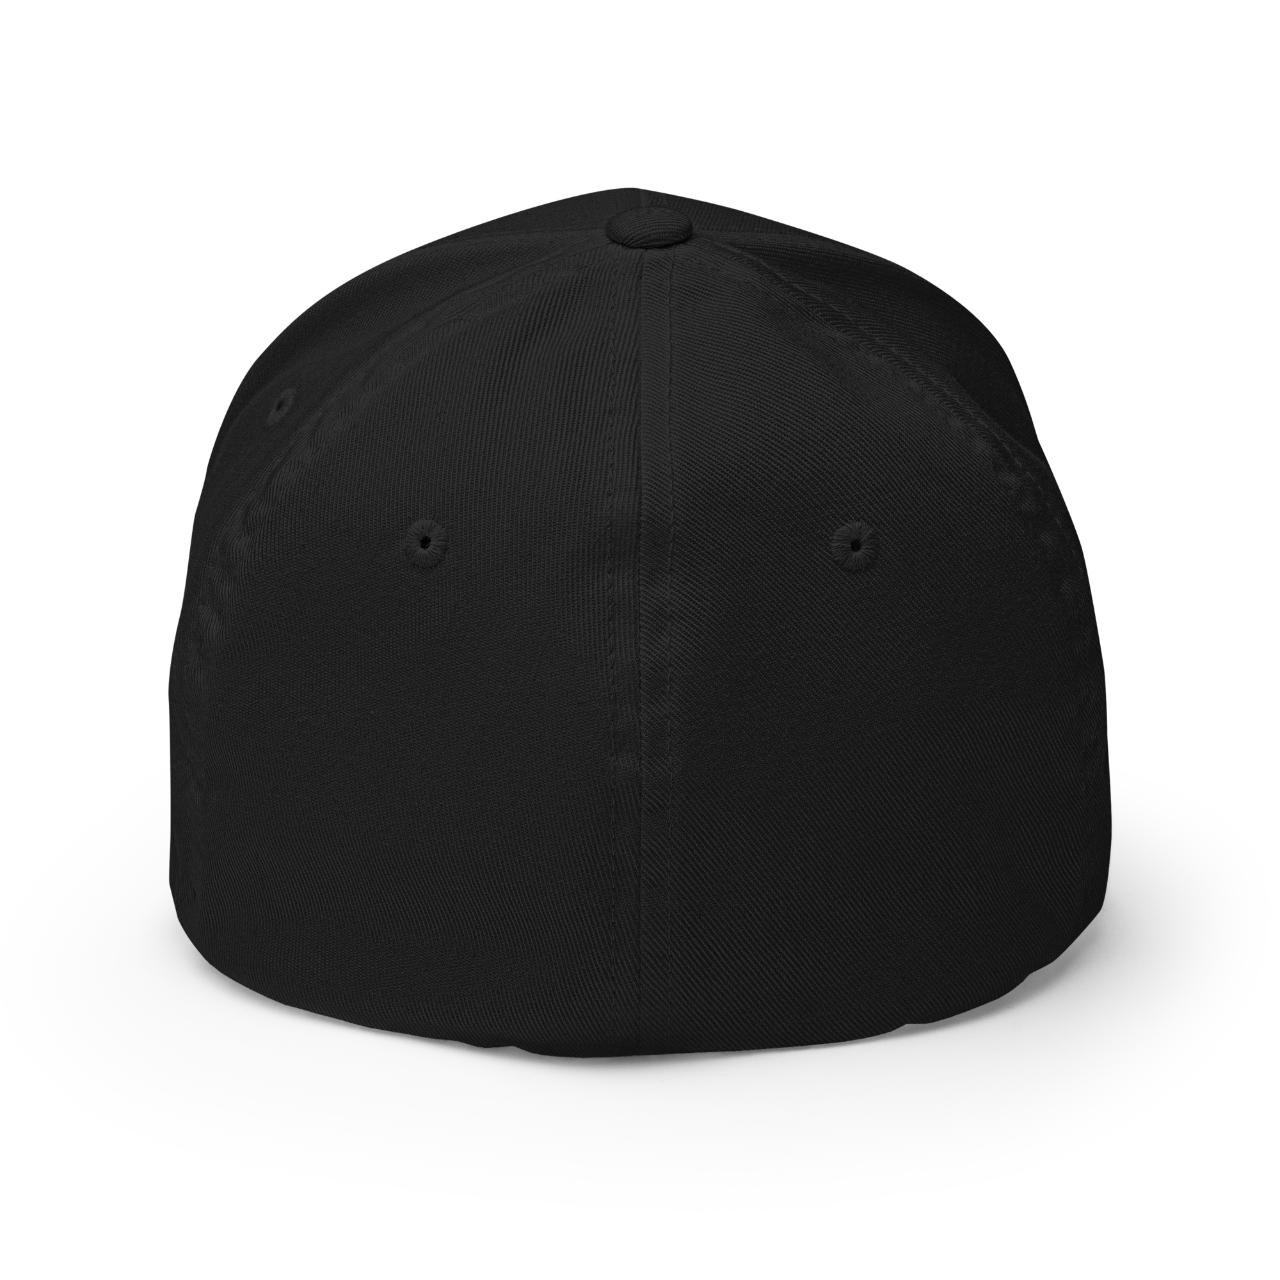 axsgtr axess electronics guitar music industry branded merchandise swag flexfit closed back baseball cap hat black back